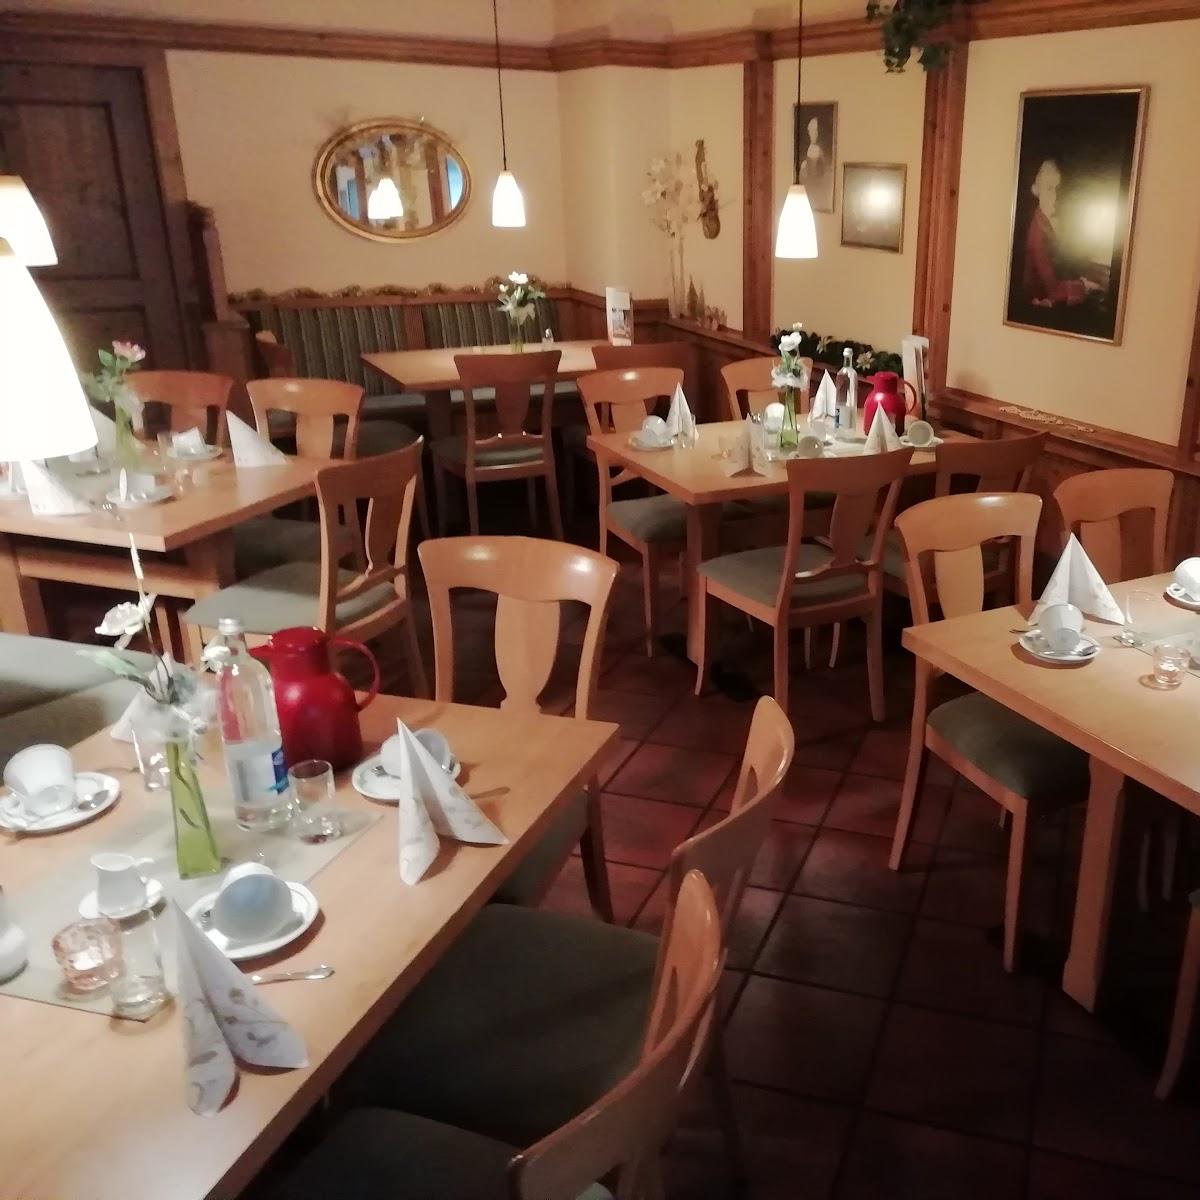 Restaurant "Cafe Mozart Confiserie ZART & BITTER" in Eschwege